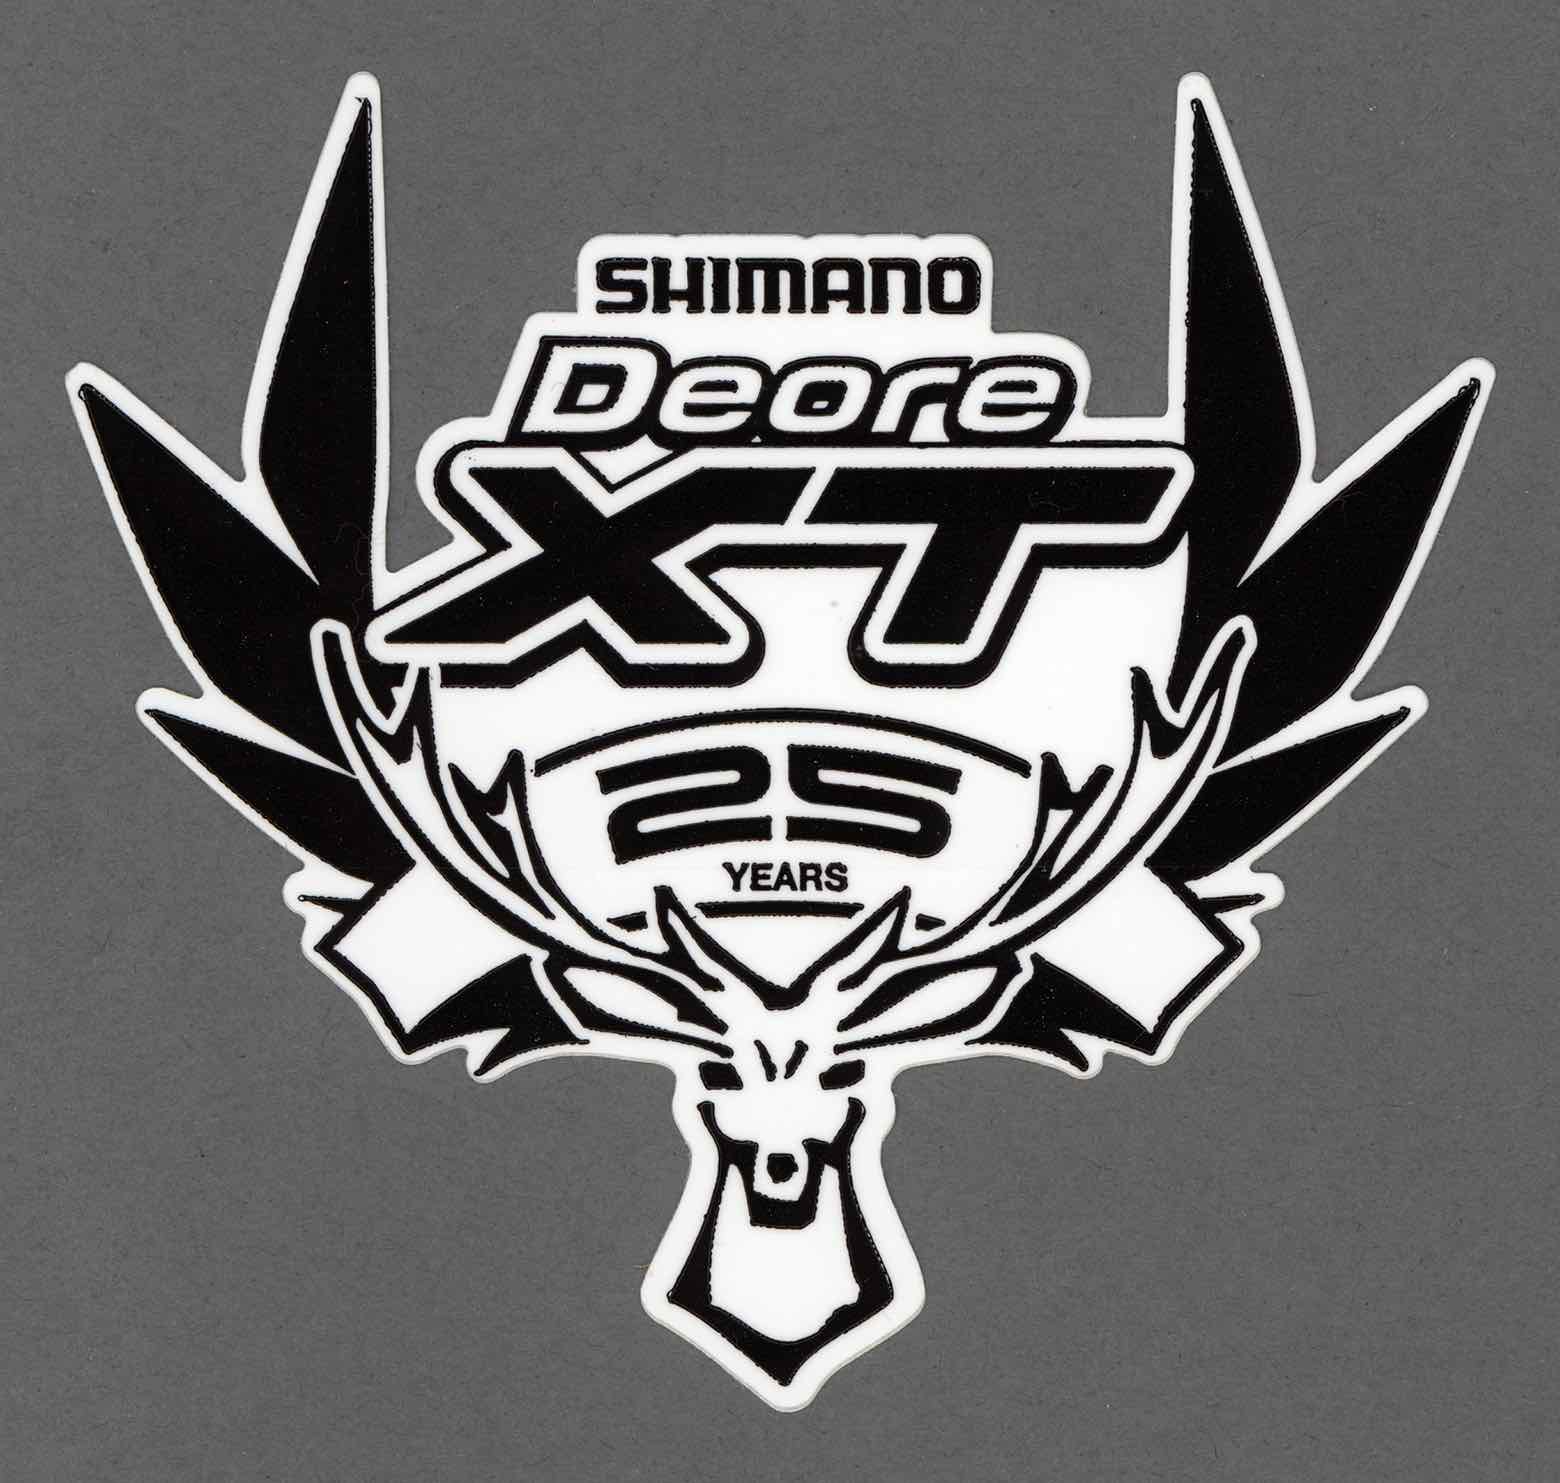 Shimano Deore XT 25 Years - sticker main image